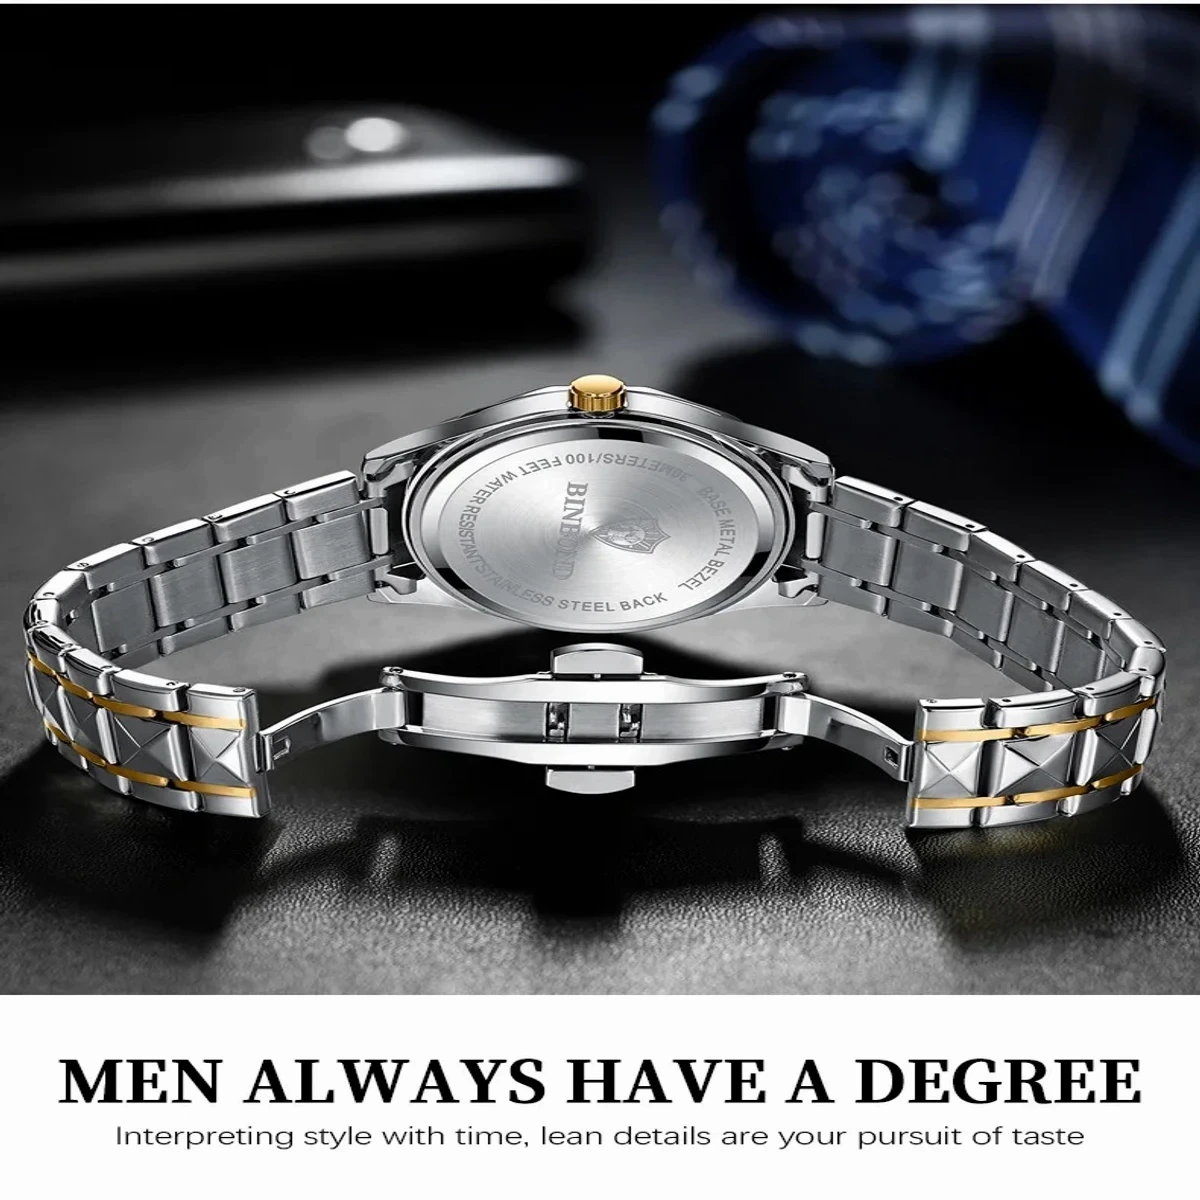 Gender-Men's Band Type-Two-Piece Strap Brand-BINBOND Department-Men Type-Wristwatch Customized-No Style-Casual, Sport Model-B2521 Features-Arabic Numerals, 12-Hour Dial, Shock-Resistant Movement-Quartz (Battery)